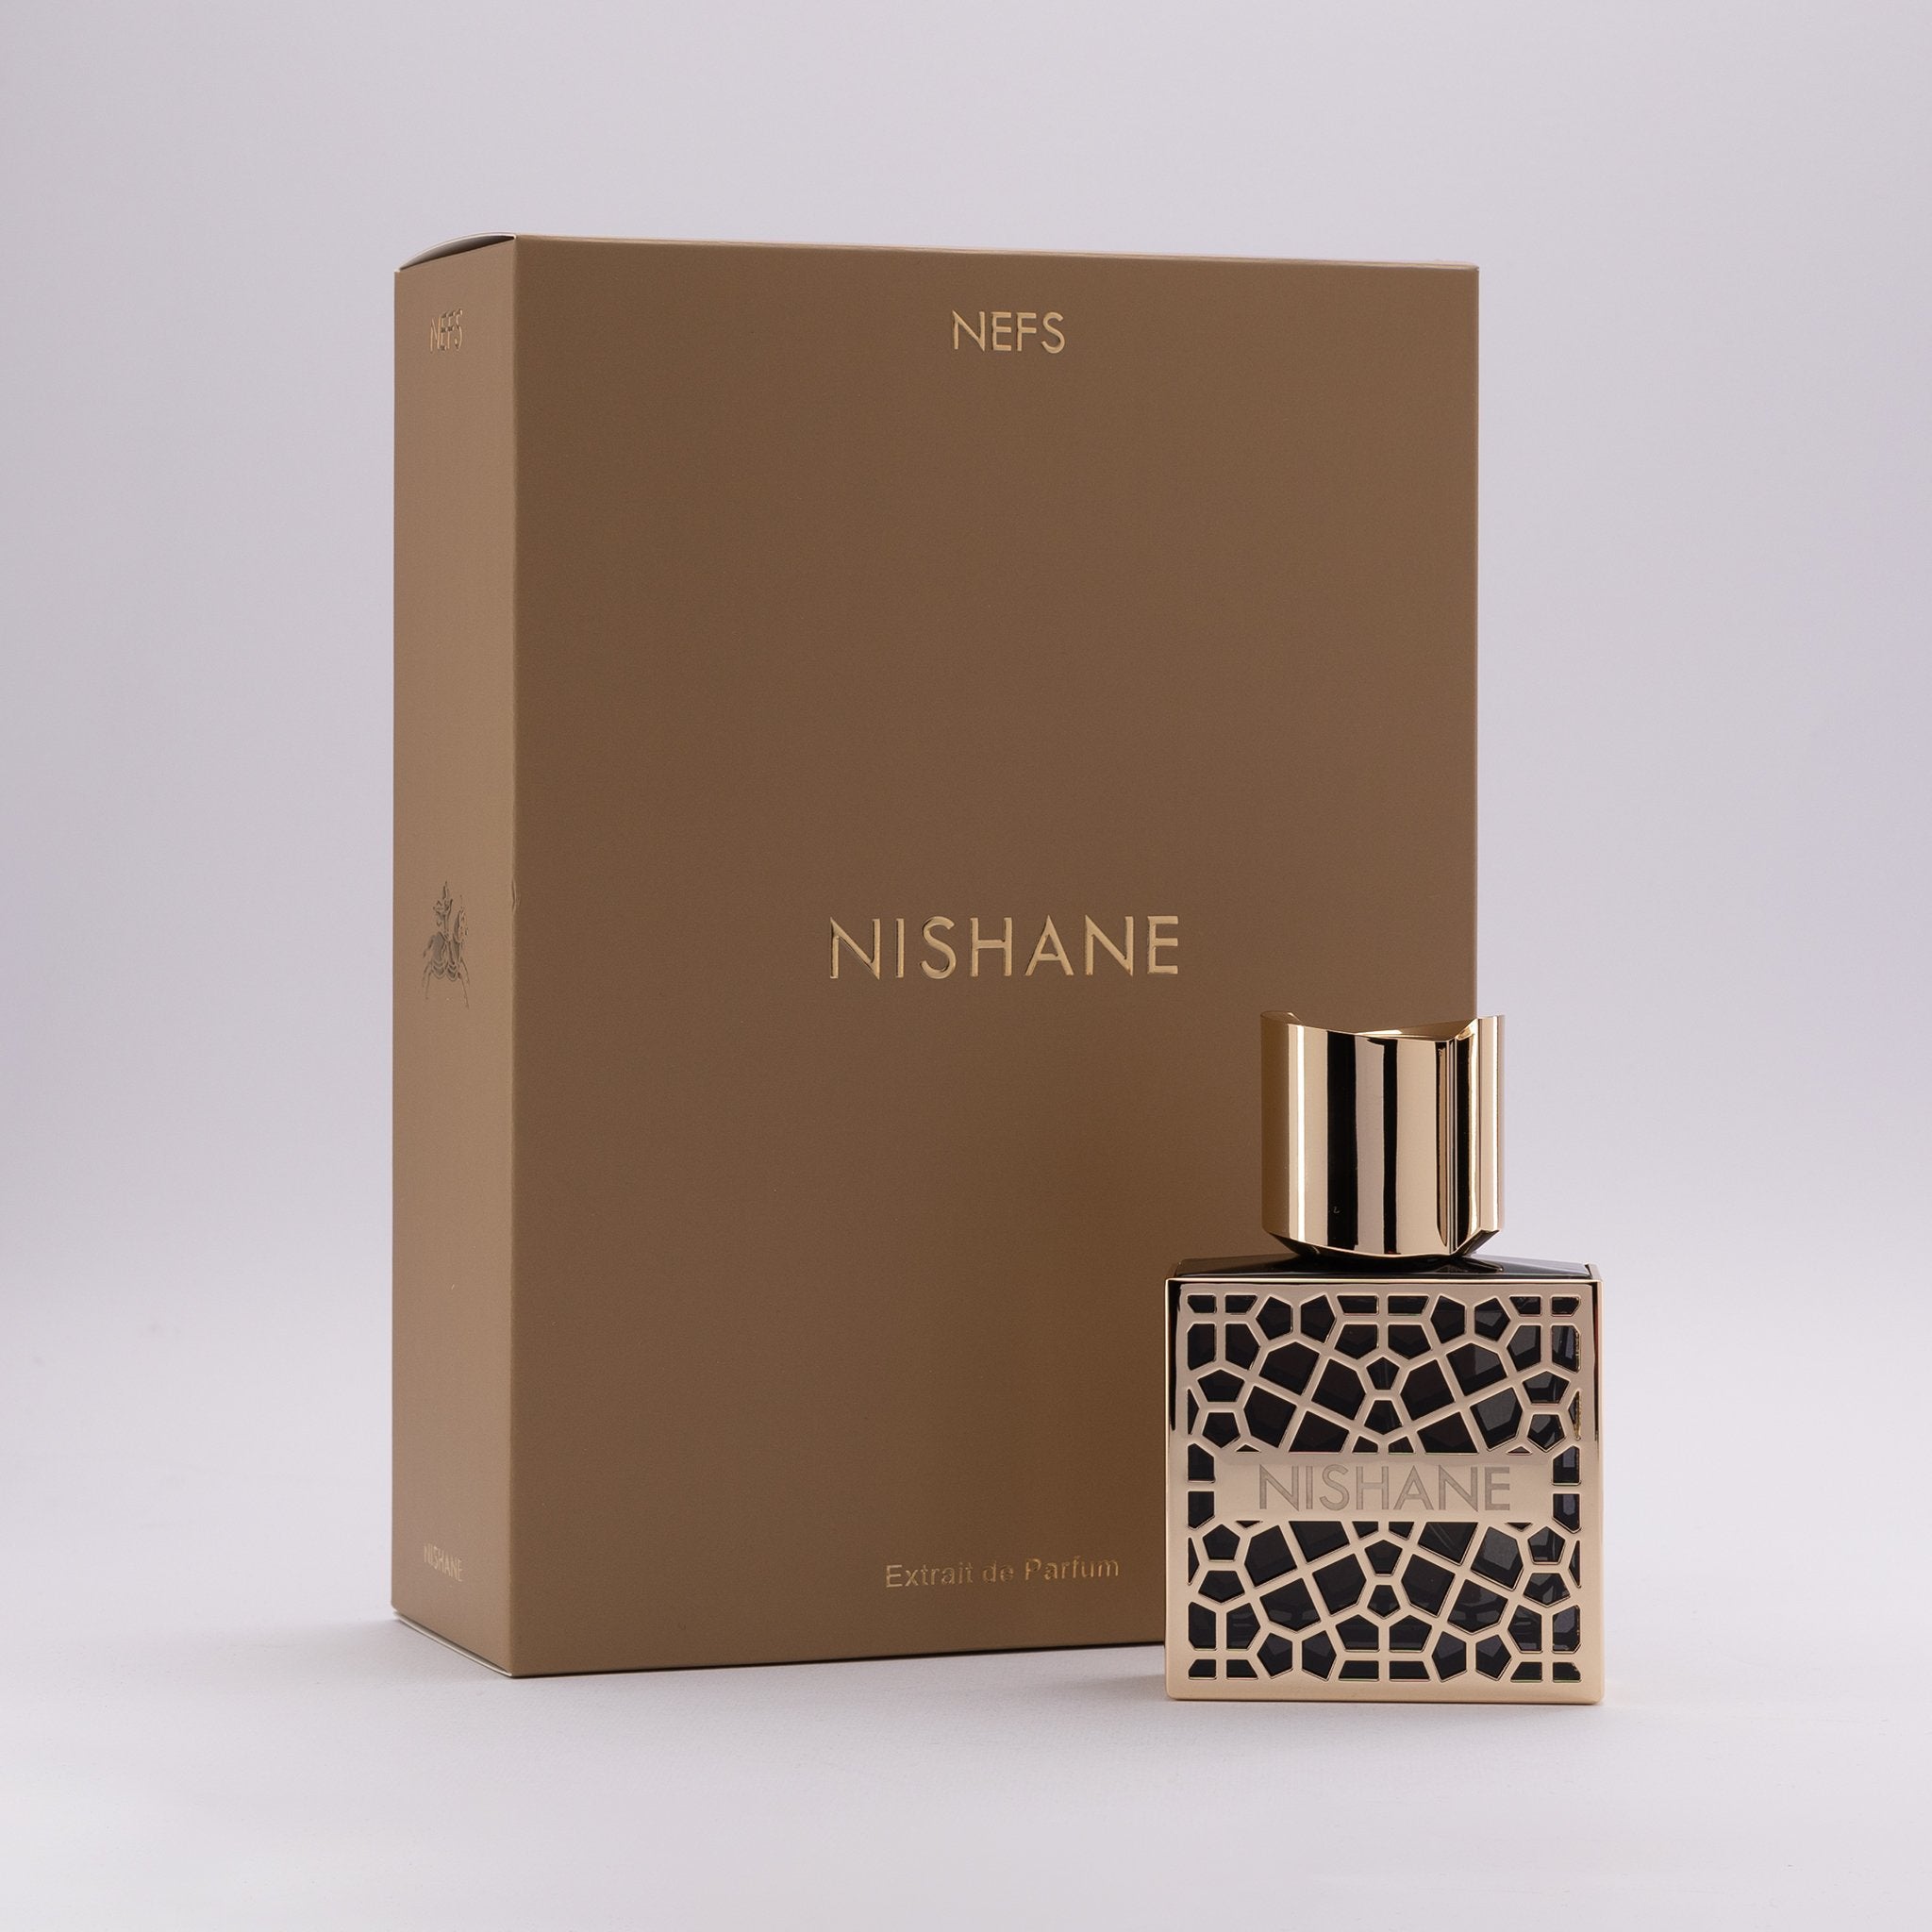 Nefs – OTRO perfume concept